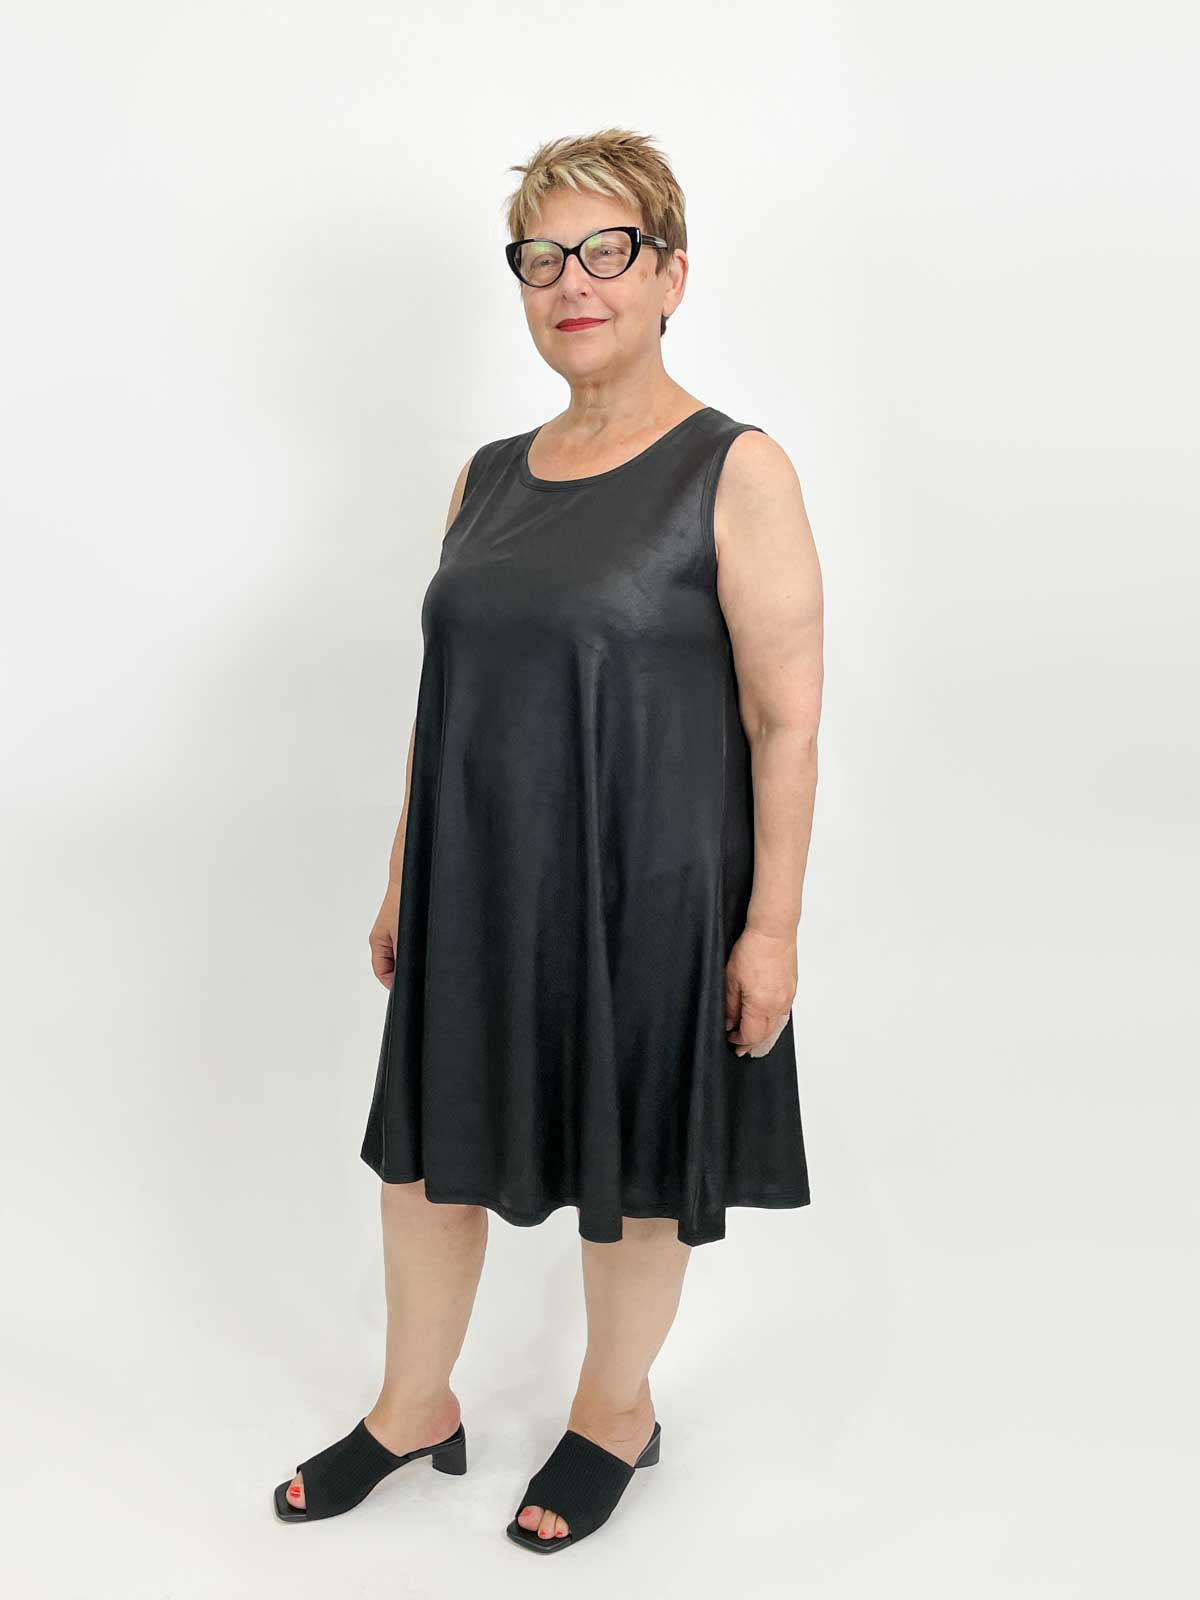 Kozan Dulce Dress, Black Vintage - Statement Boutique